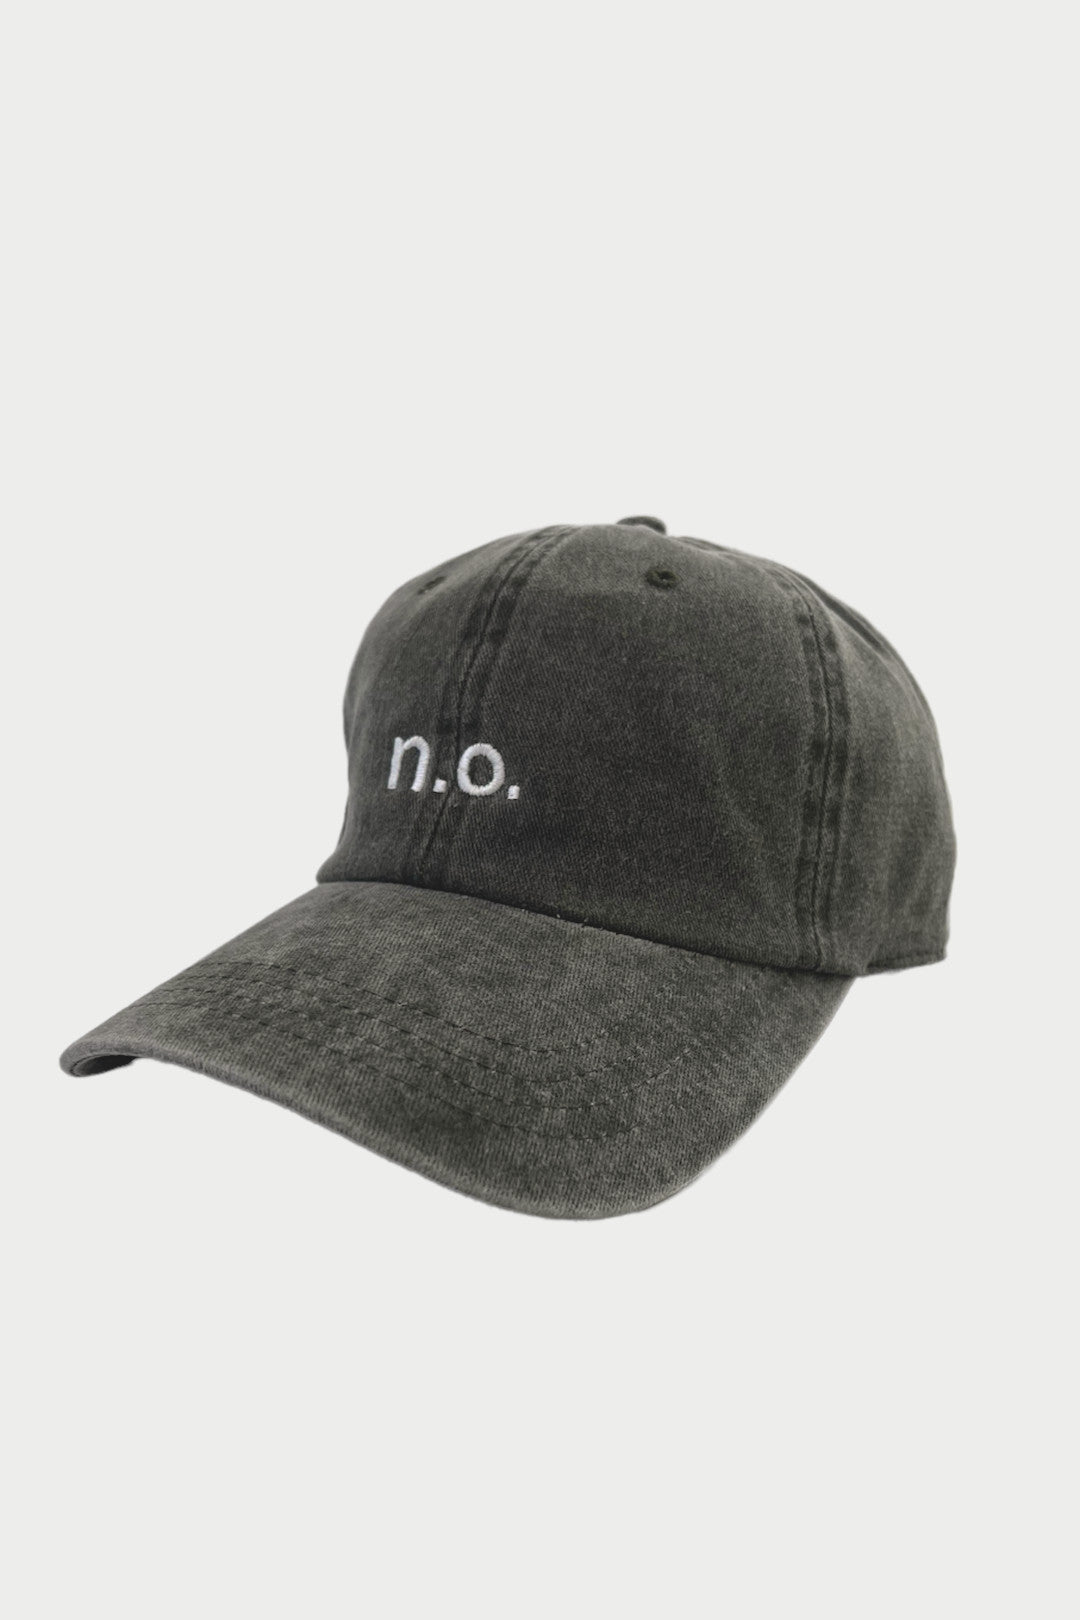 n.o. Hat - Charcoal#color_charcoal